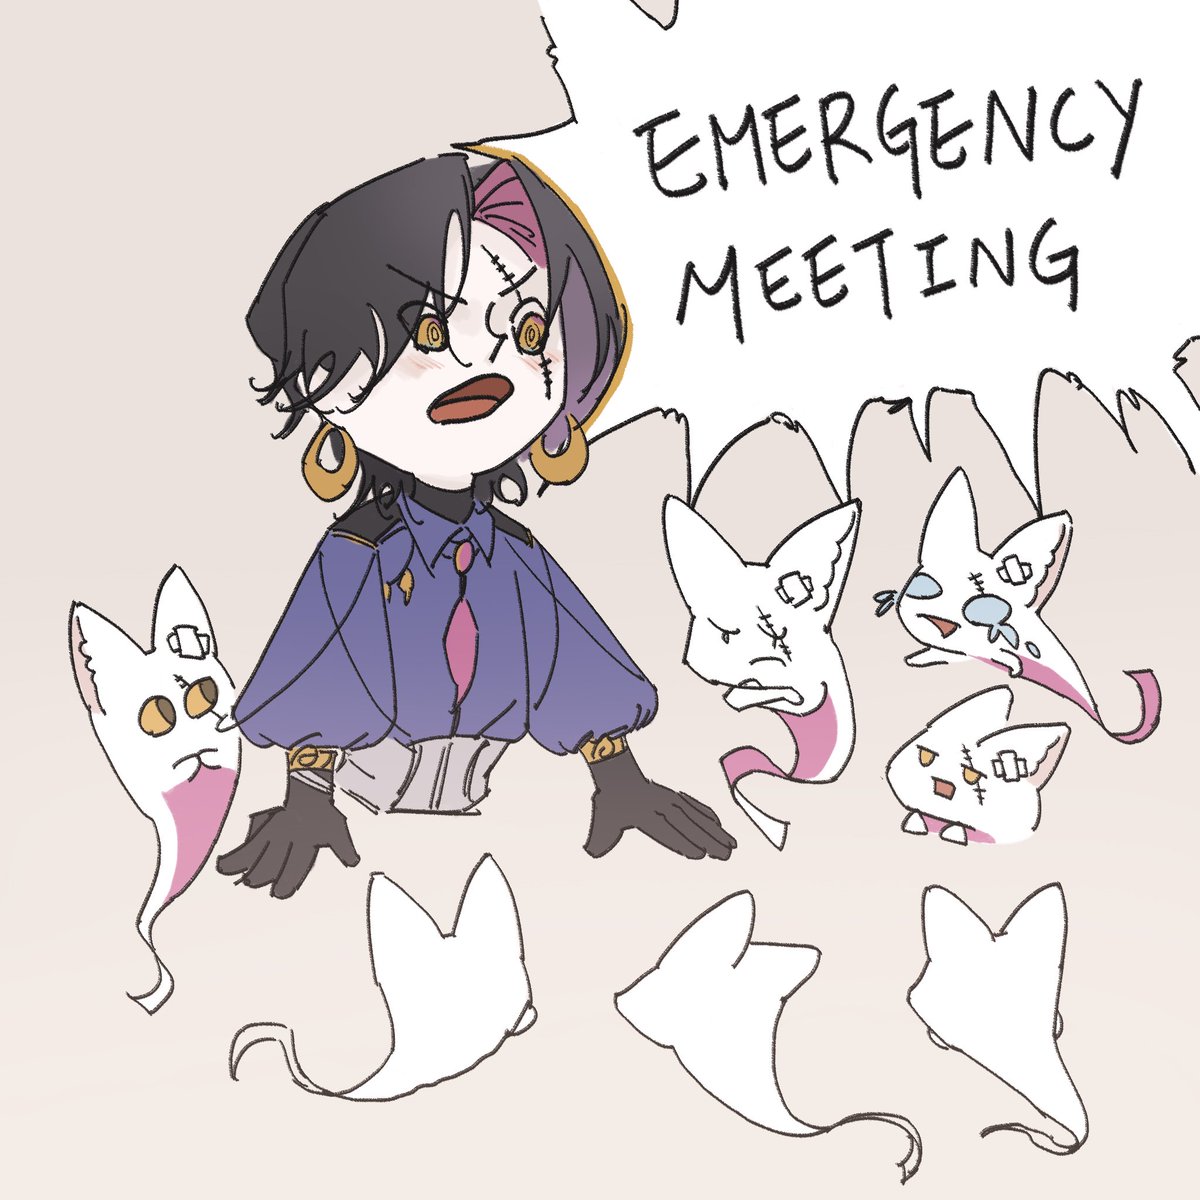 Emergency meeting guys!!!
#zalillust